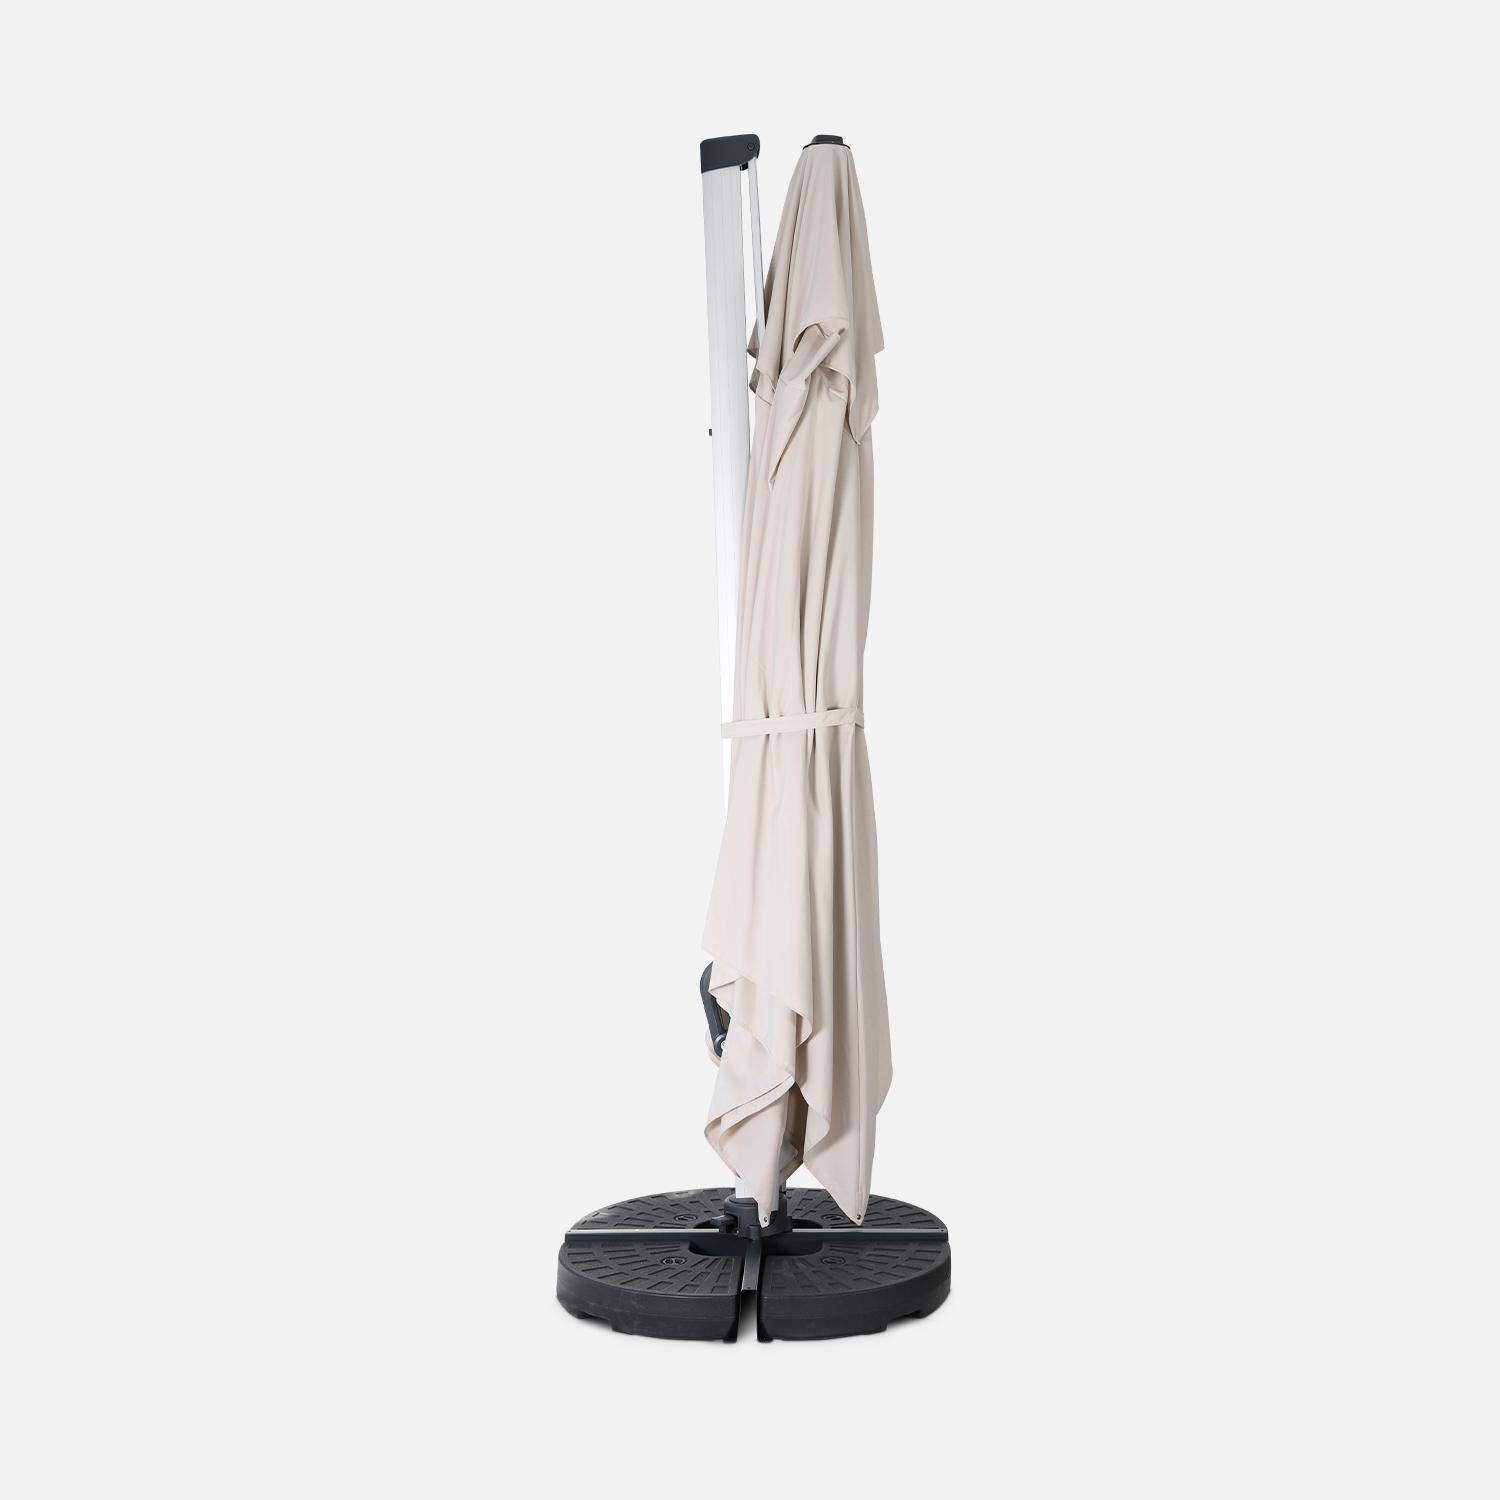 Topklasse parasol, 4x4m, beige polyester doek, geanodiseerd aluminium frame, hoes inbegrepen Photo4